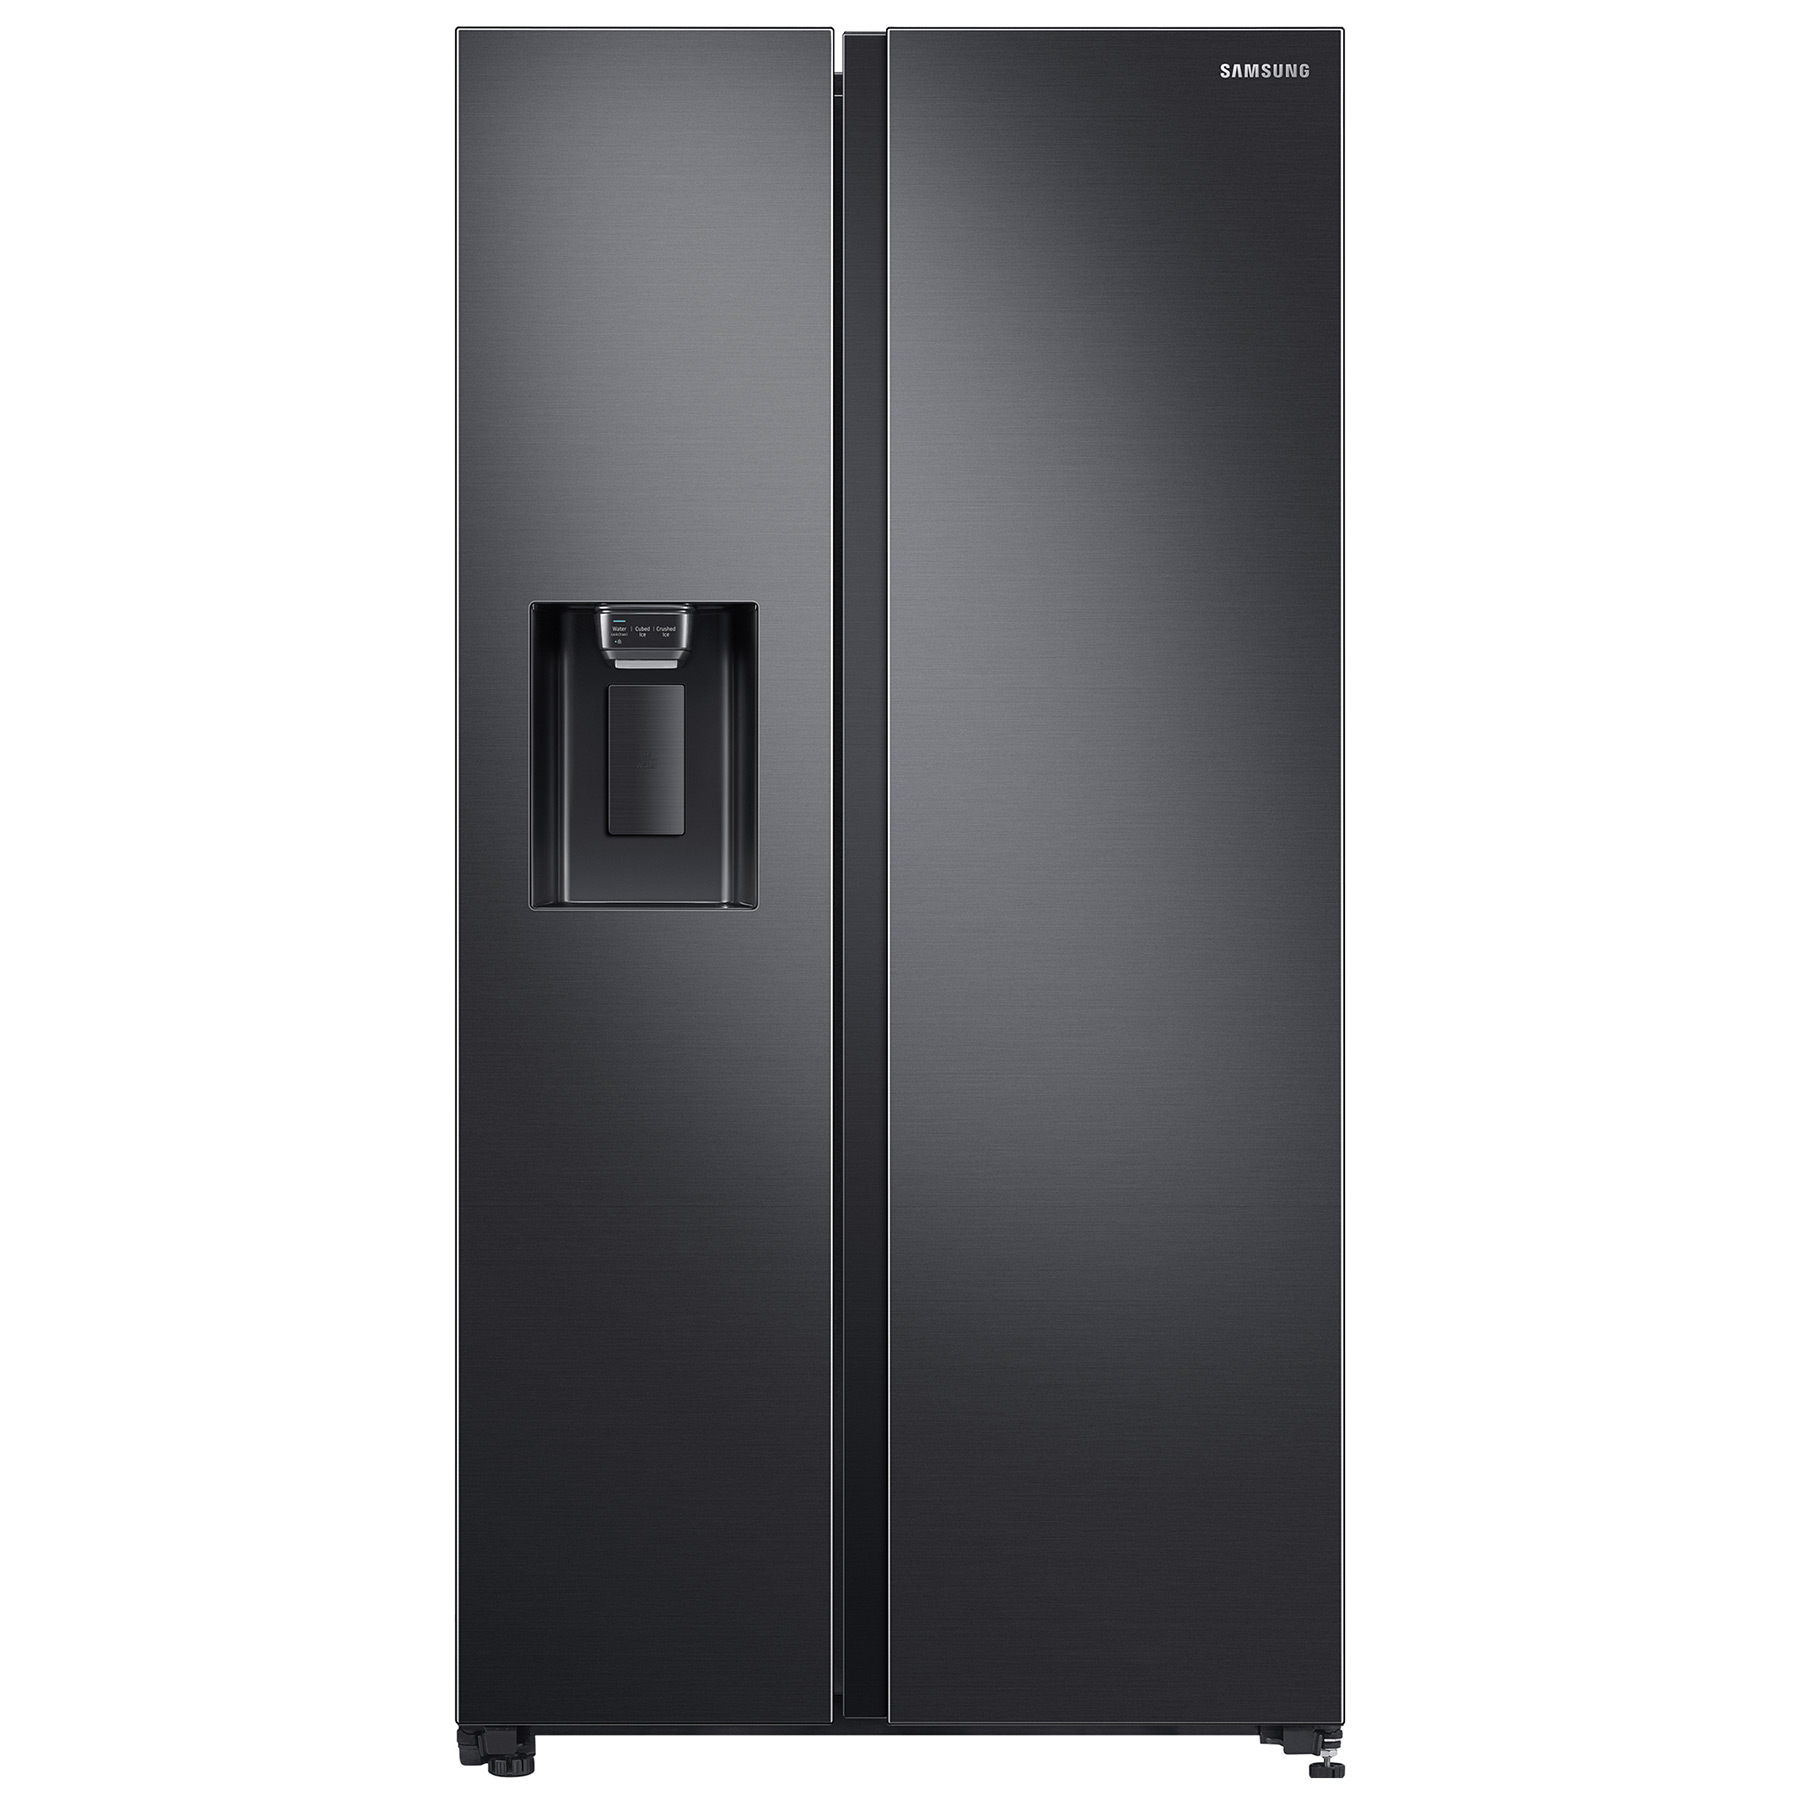 Samsung RS65R5401B4 Series 6 American Fridge Freezer in Black PL I W